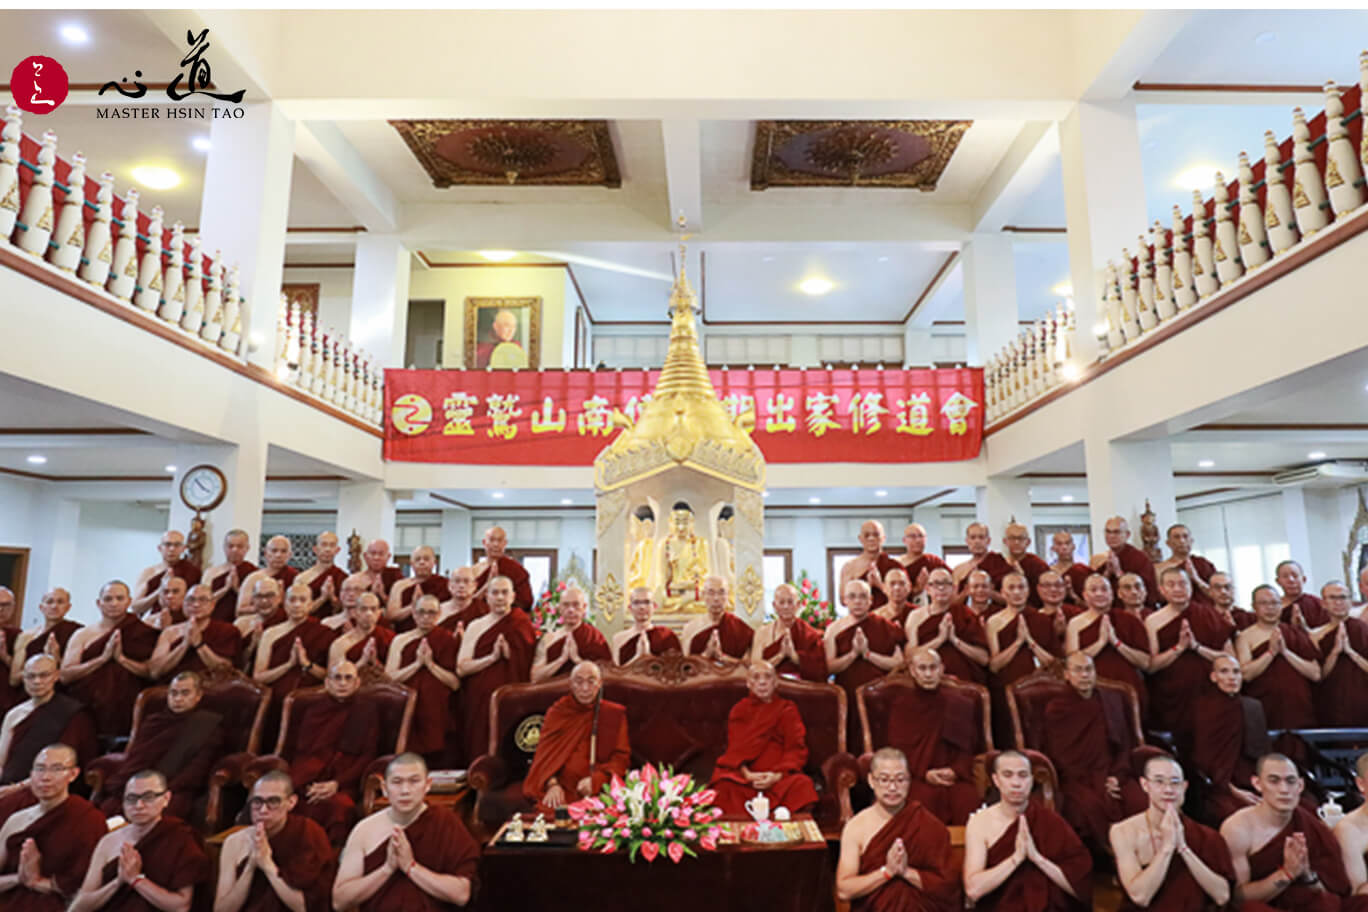 Monastic Experiential Program in Myanmar - Pure Intention with Ethical Disciplines - Myanmar Simplicity -MasterHsinTao